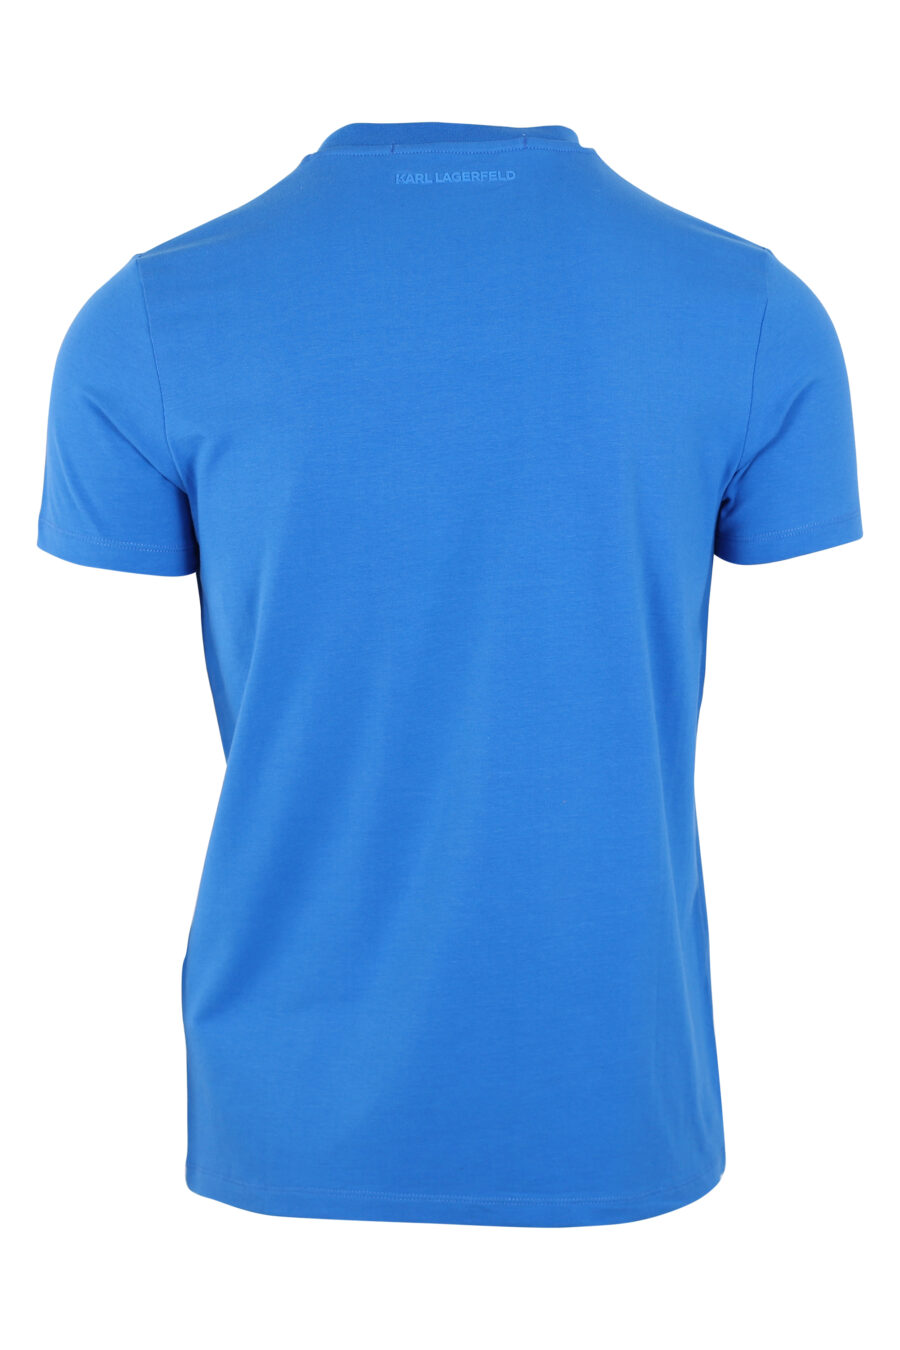 T-shirt bleu avec maxilogo "karl" noir contrasté - IMG 9448